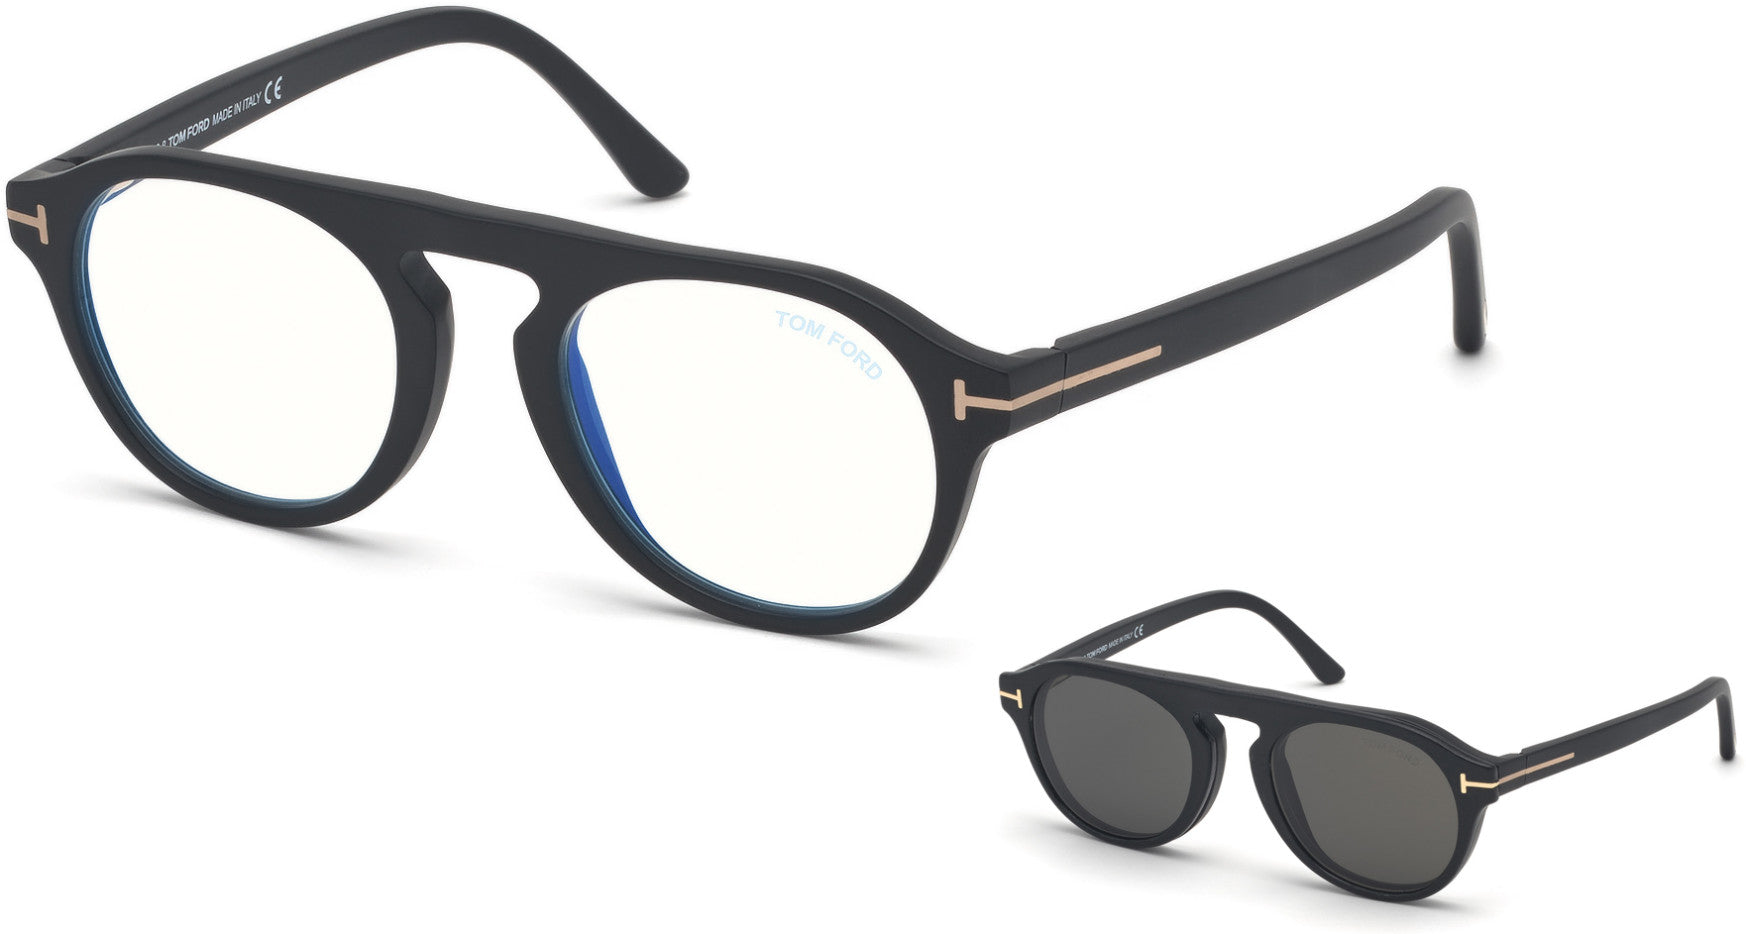 Tom Ford FT5533-B Oval Eyeglasses 02A-02A - Matte Black/ Blue Block Lenses, Smoke Clip In Black Leather